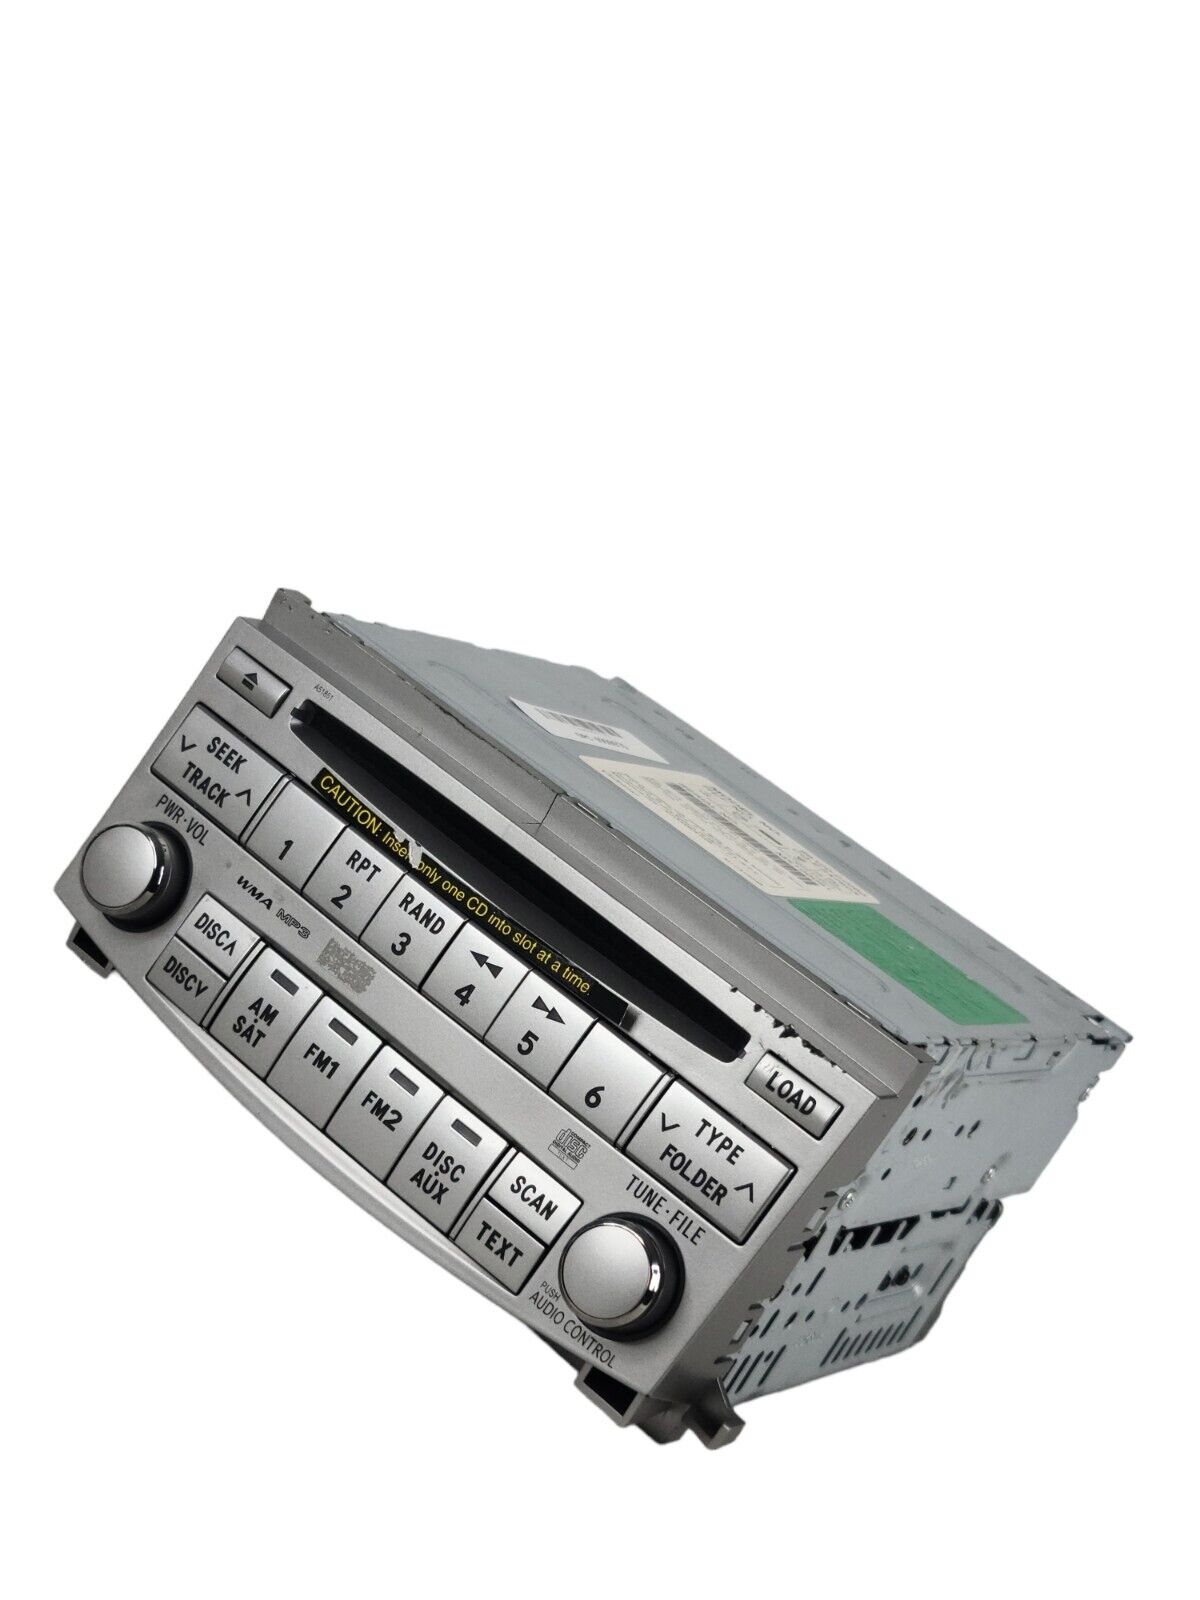 2006 Toyota Avalon AM FM Radio Single Disc CD Player 86120-07060 OPT A51851